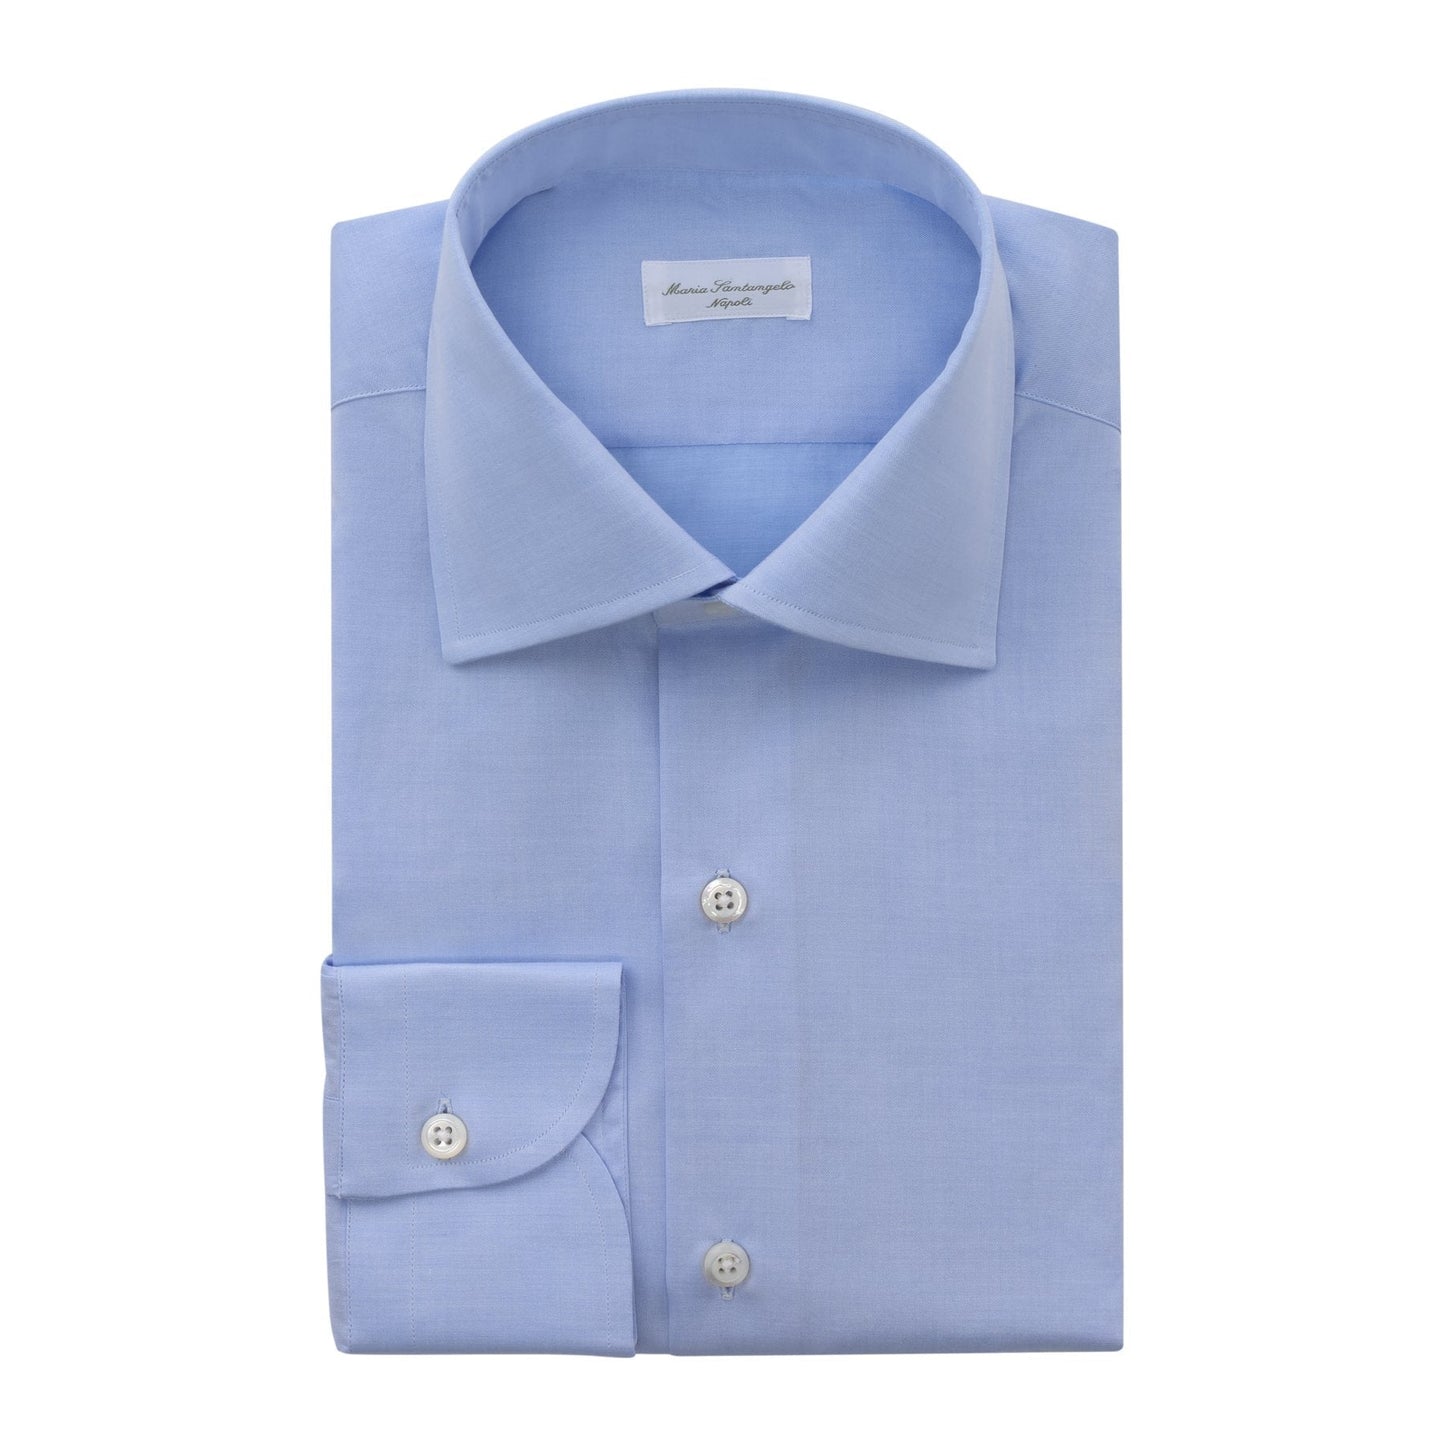 Maria Santangelo Classic Cotton Shirt in Light Blue - SARTALE